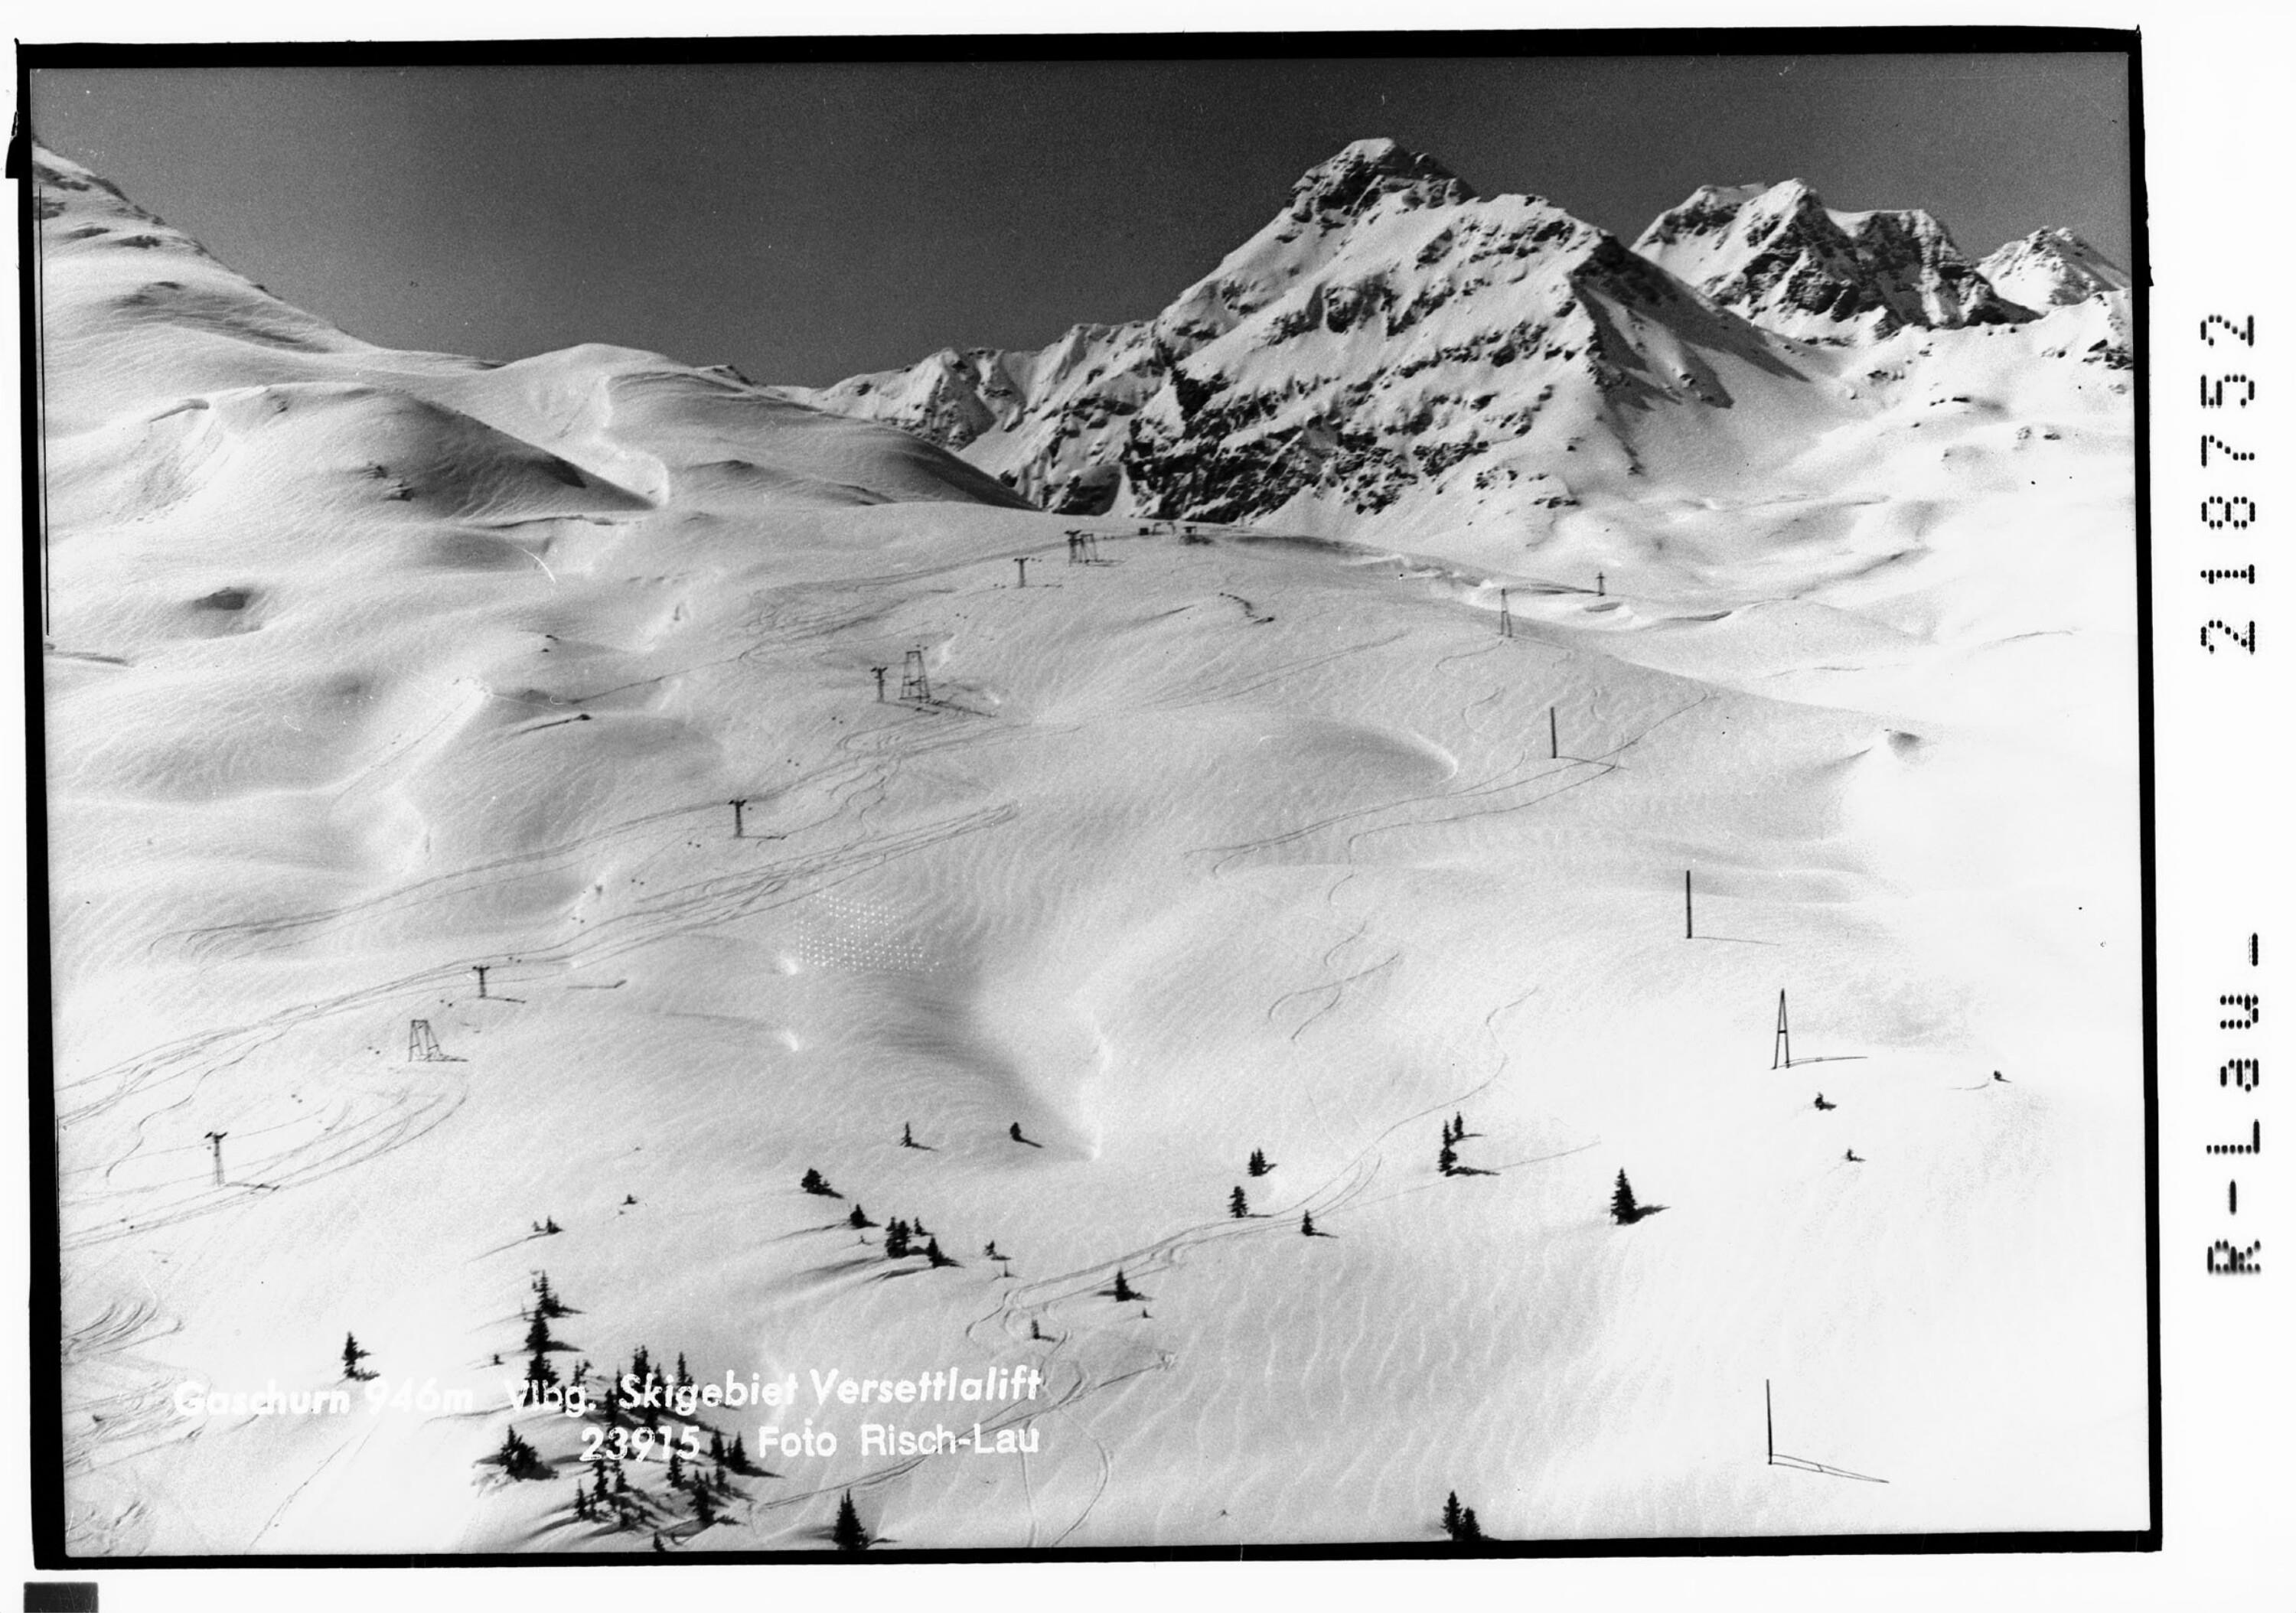 Gaschurn 946 m Vorarlberg Skigebiet Versettlalift></div>


    <hr>
    <div class=